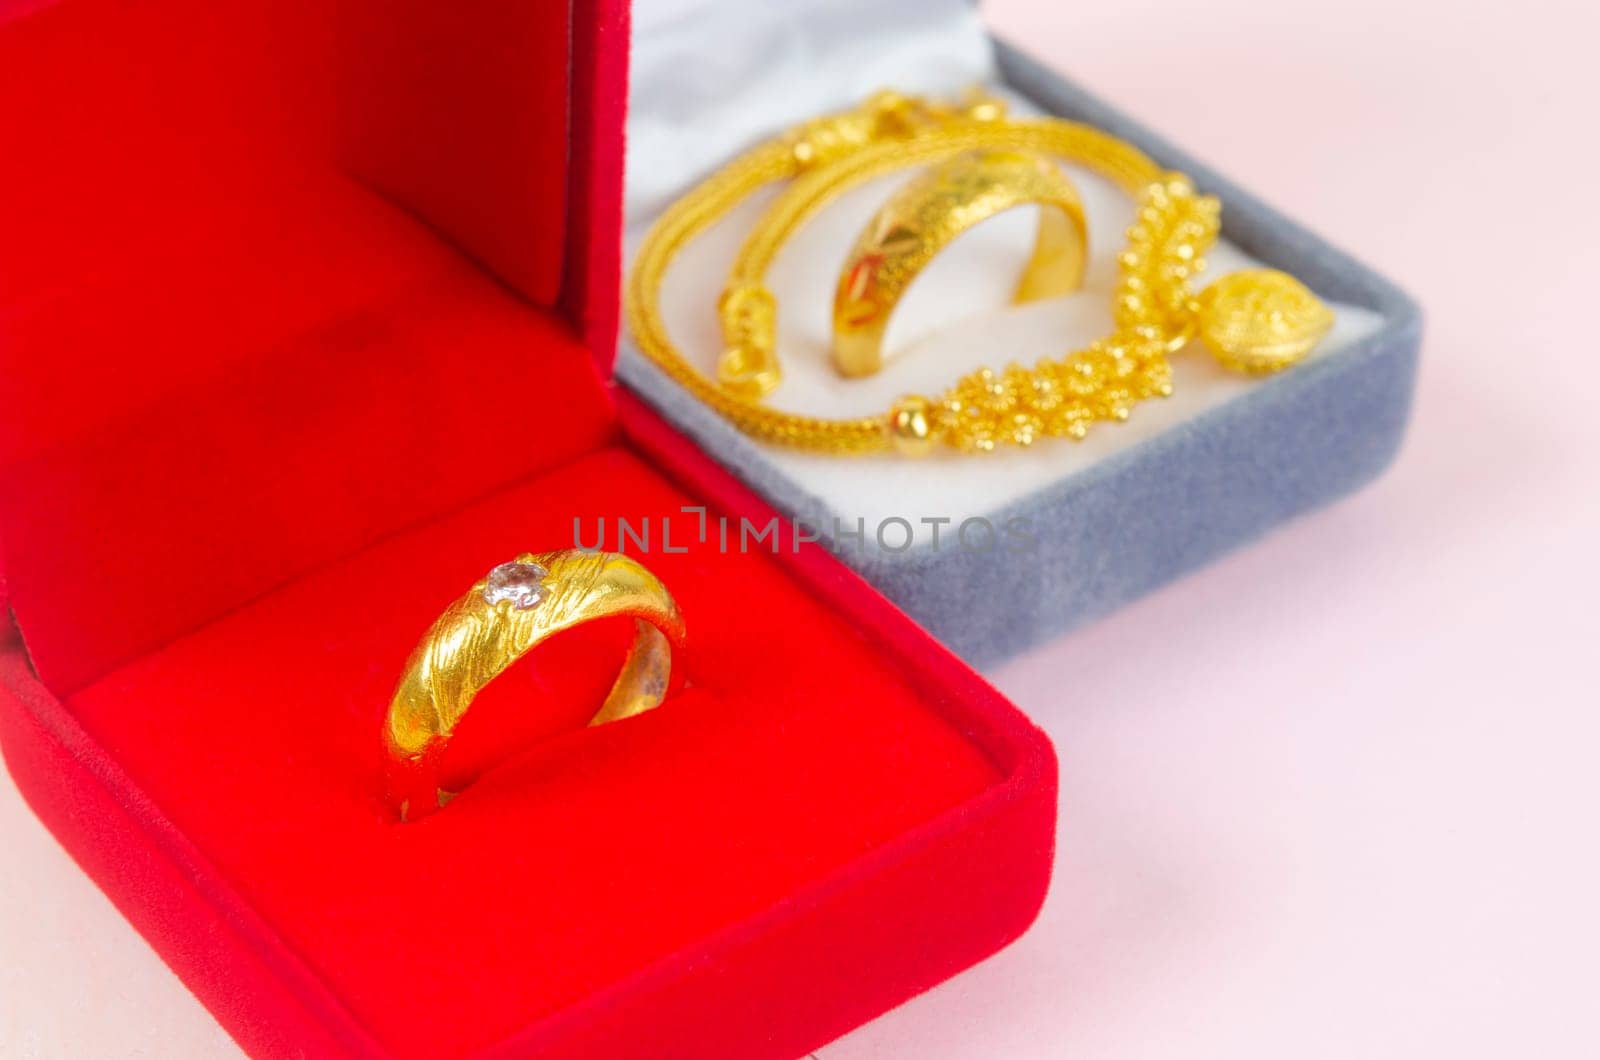 The Gold ring on red velvet box. by Gamjai